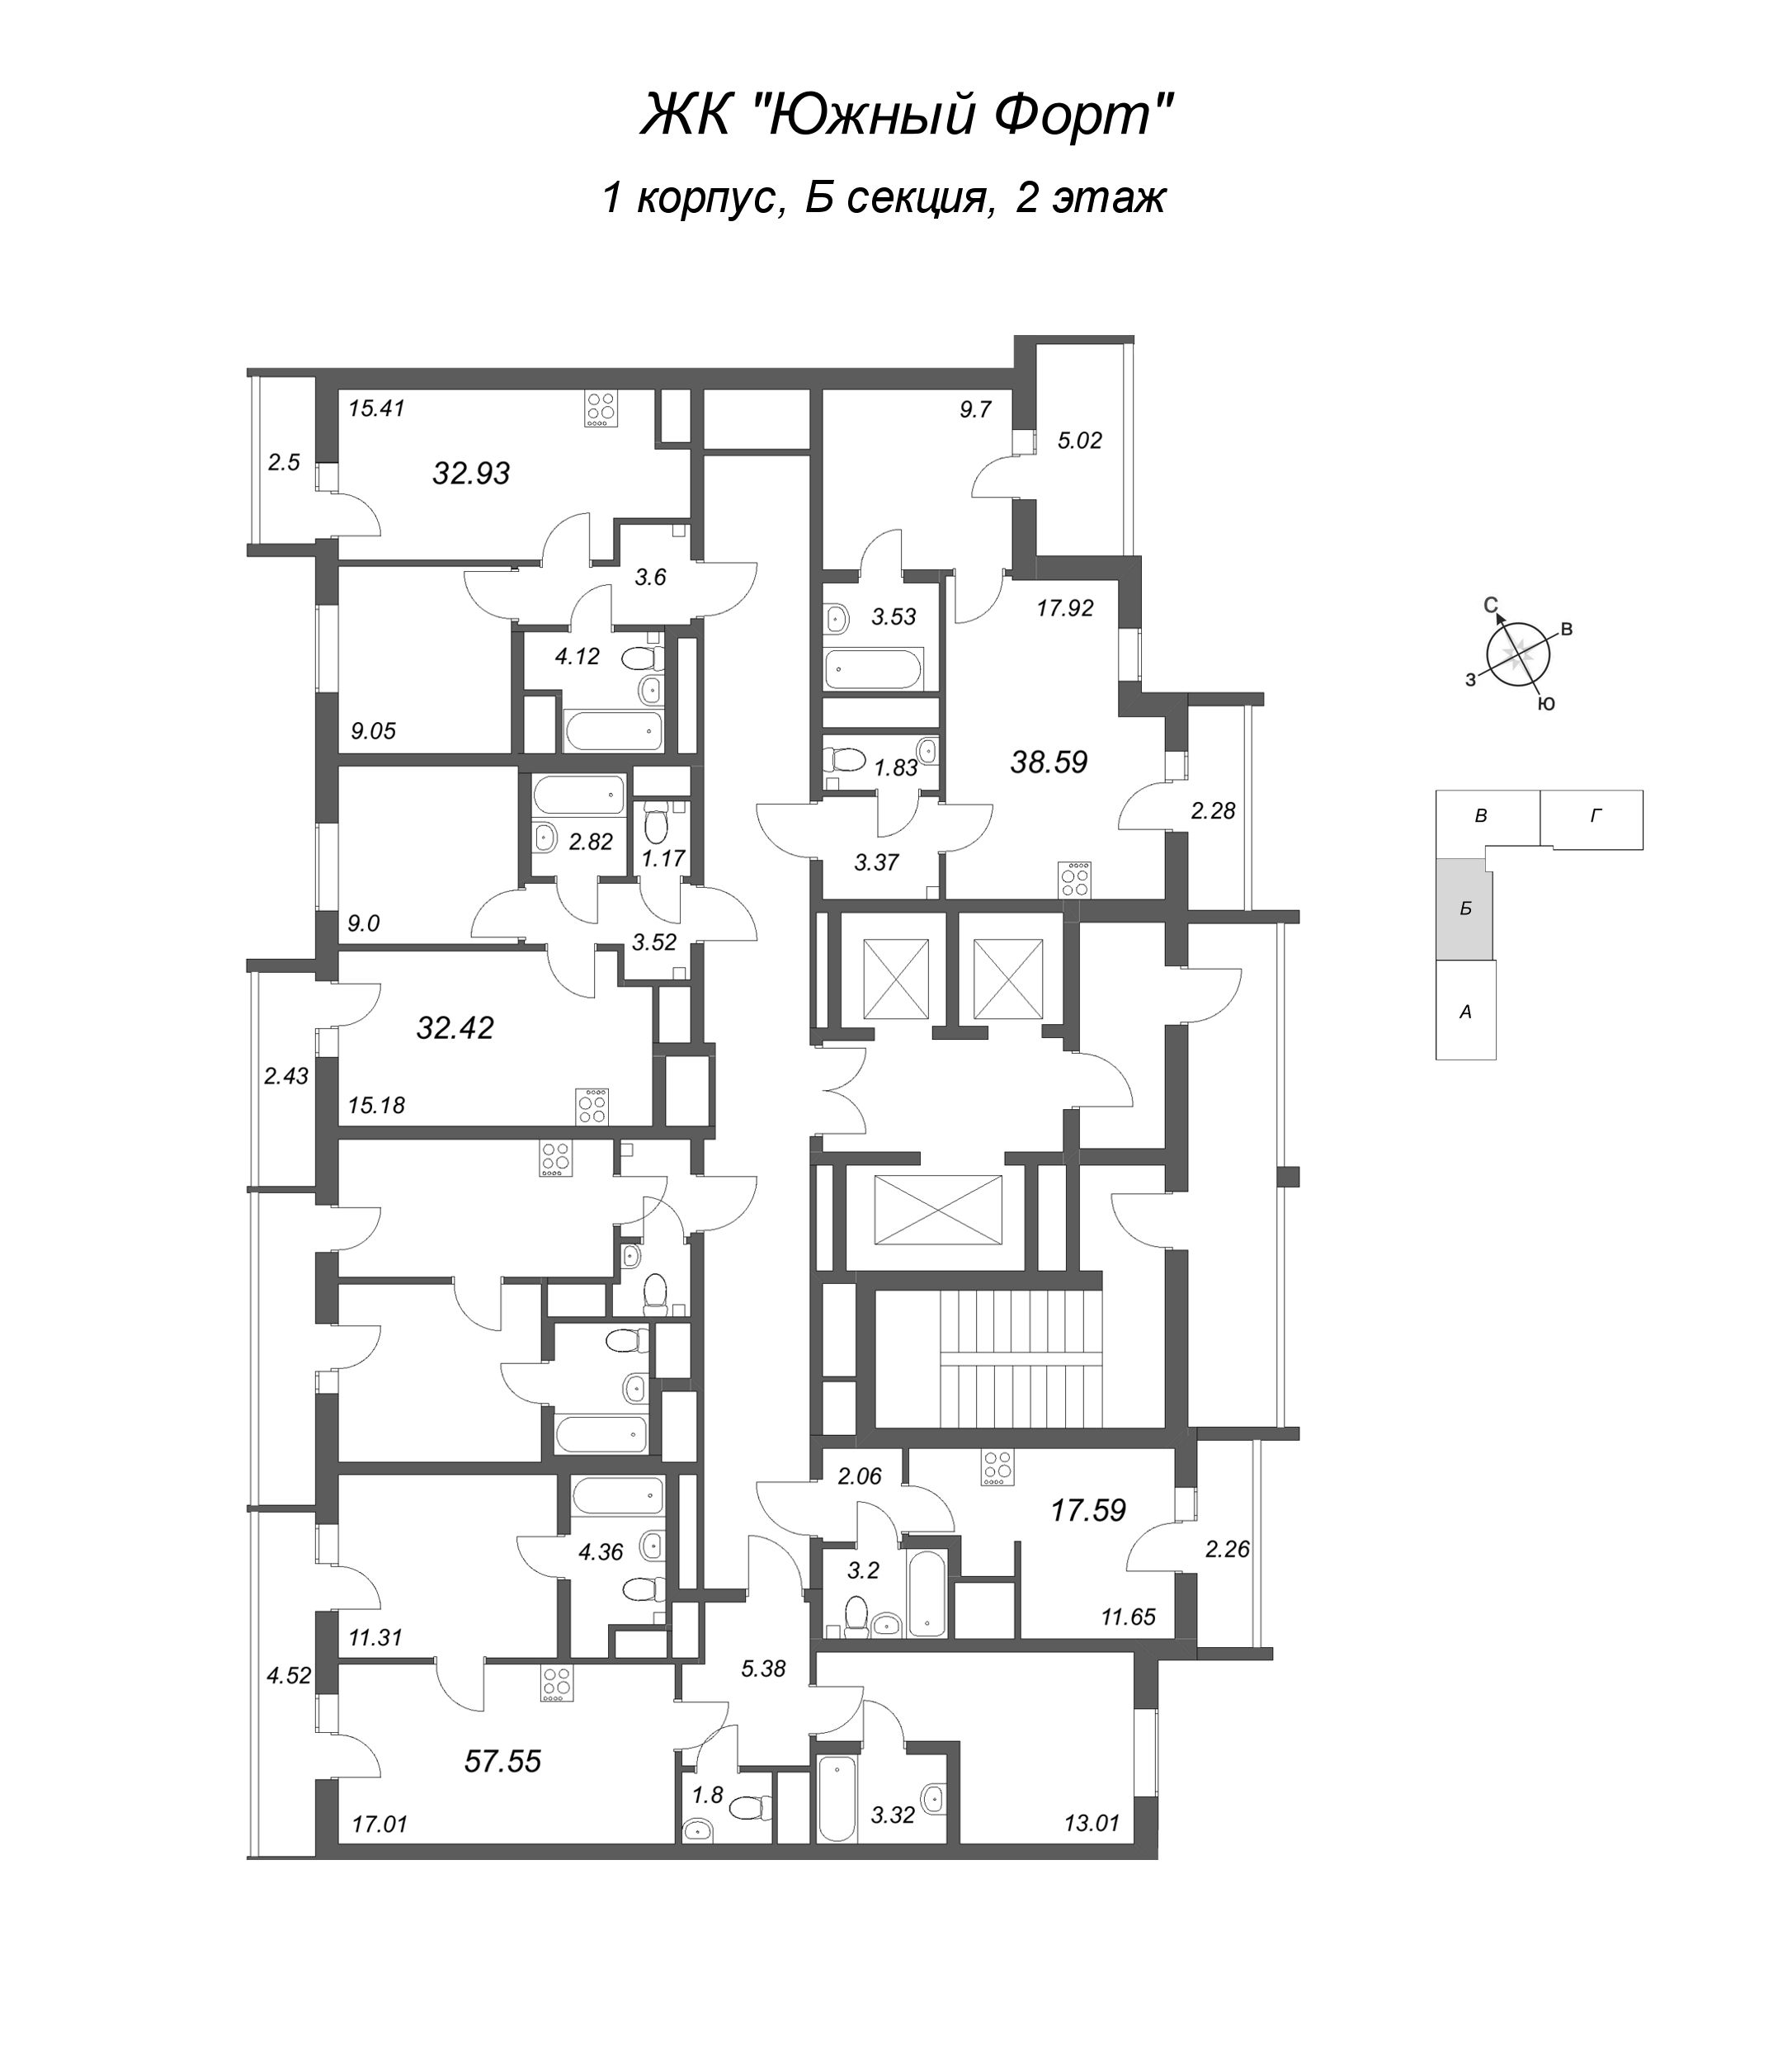 2-комнатная (Евро) квартира, 32.42 м² - планировка этажа